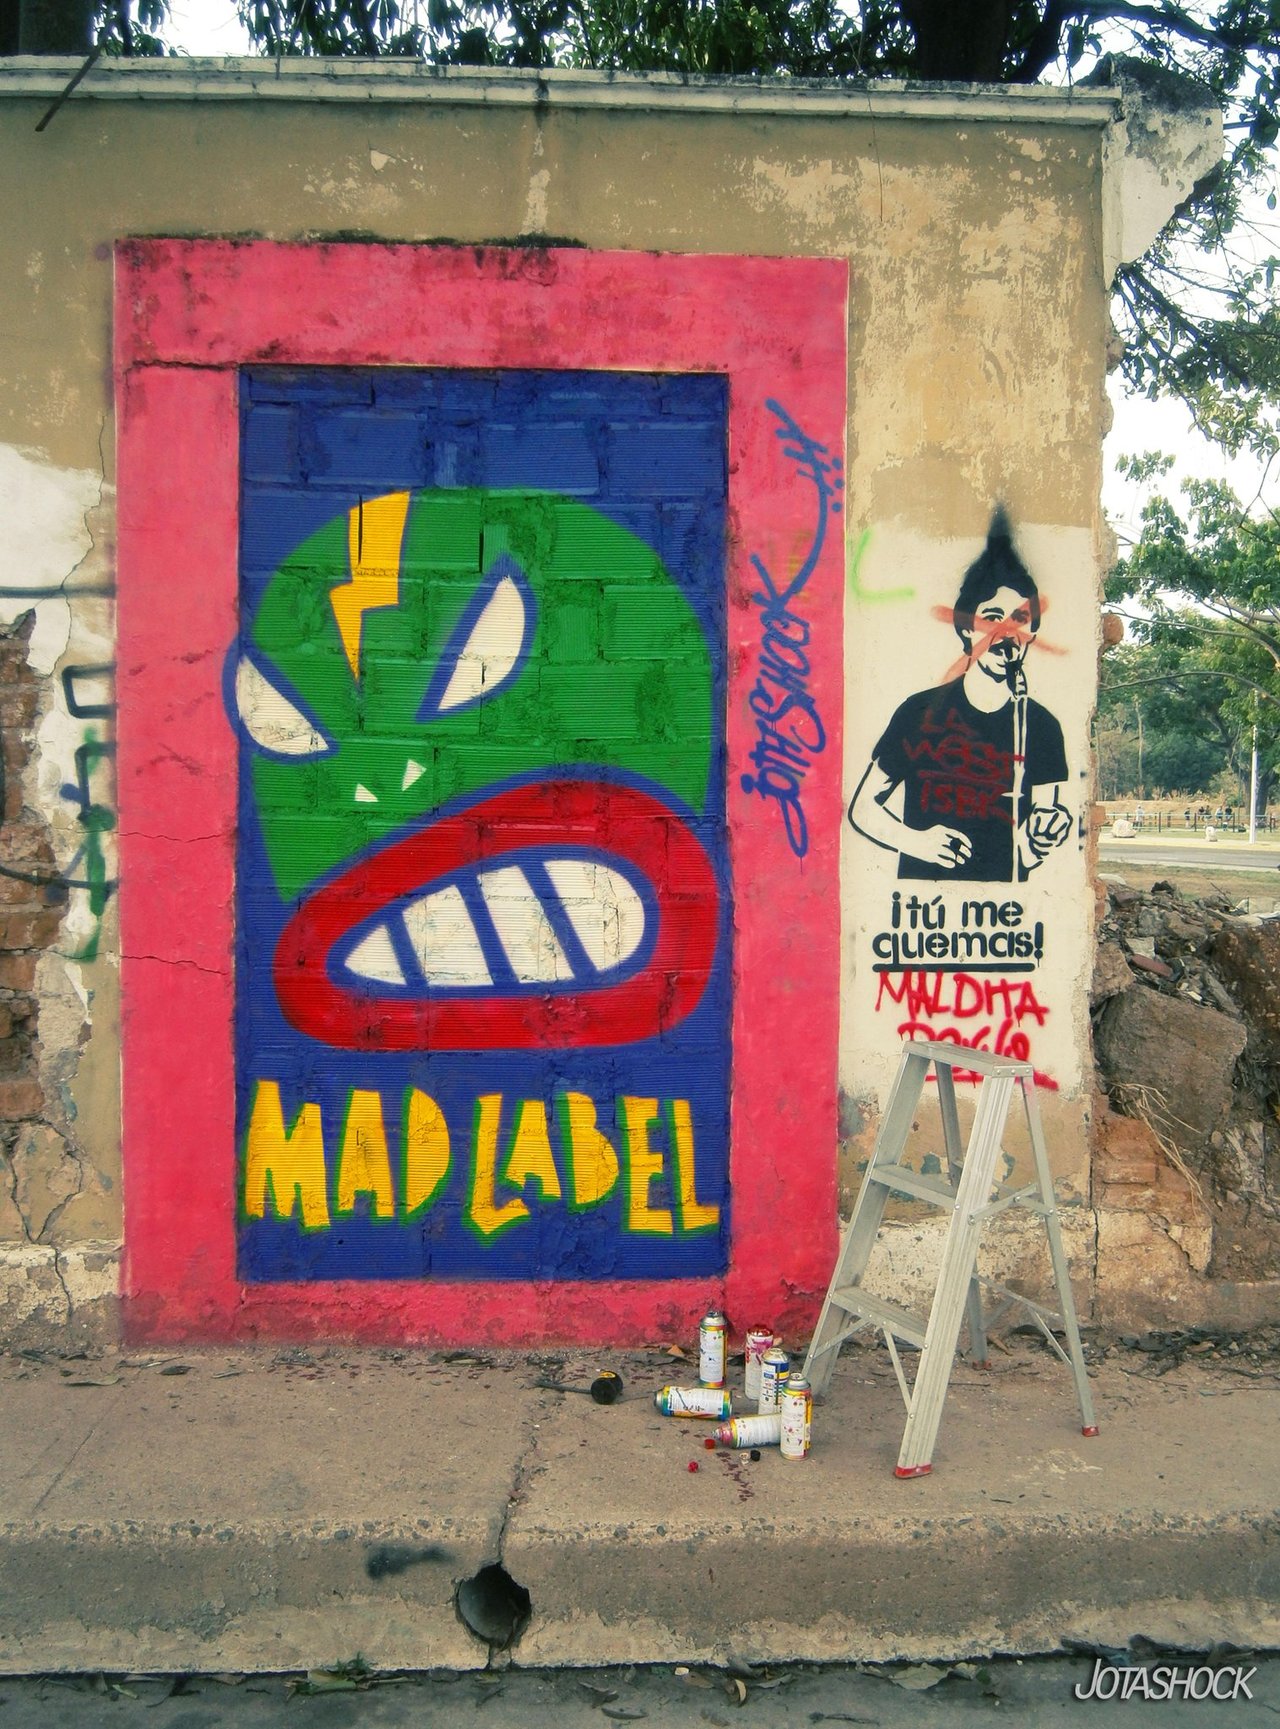 Jotashock para Mad Label

#streetart #graffiti #art #arteurbano #mural #MadLabel #Jotashock #Valencia #Venezuela http://t.co/qRJr7opzvx